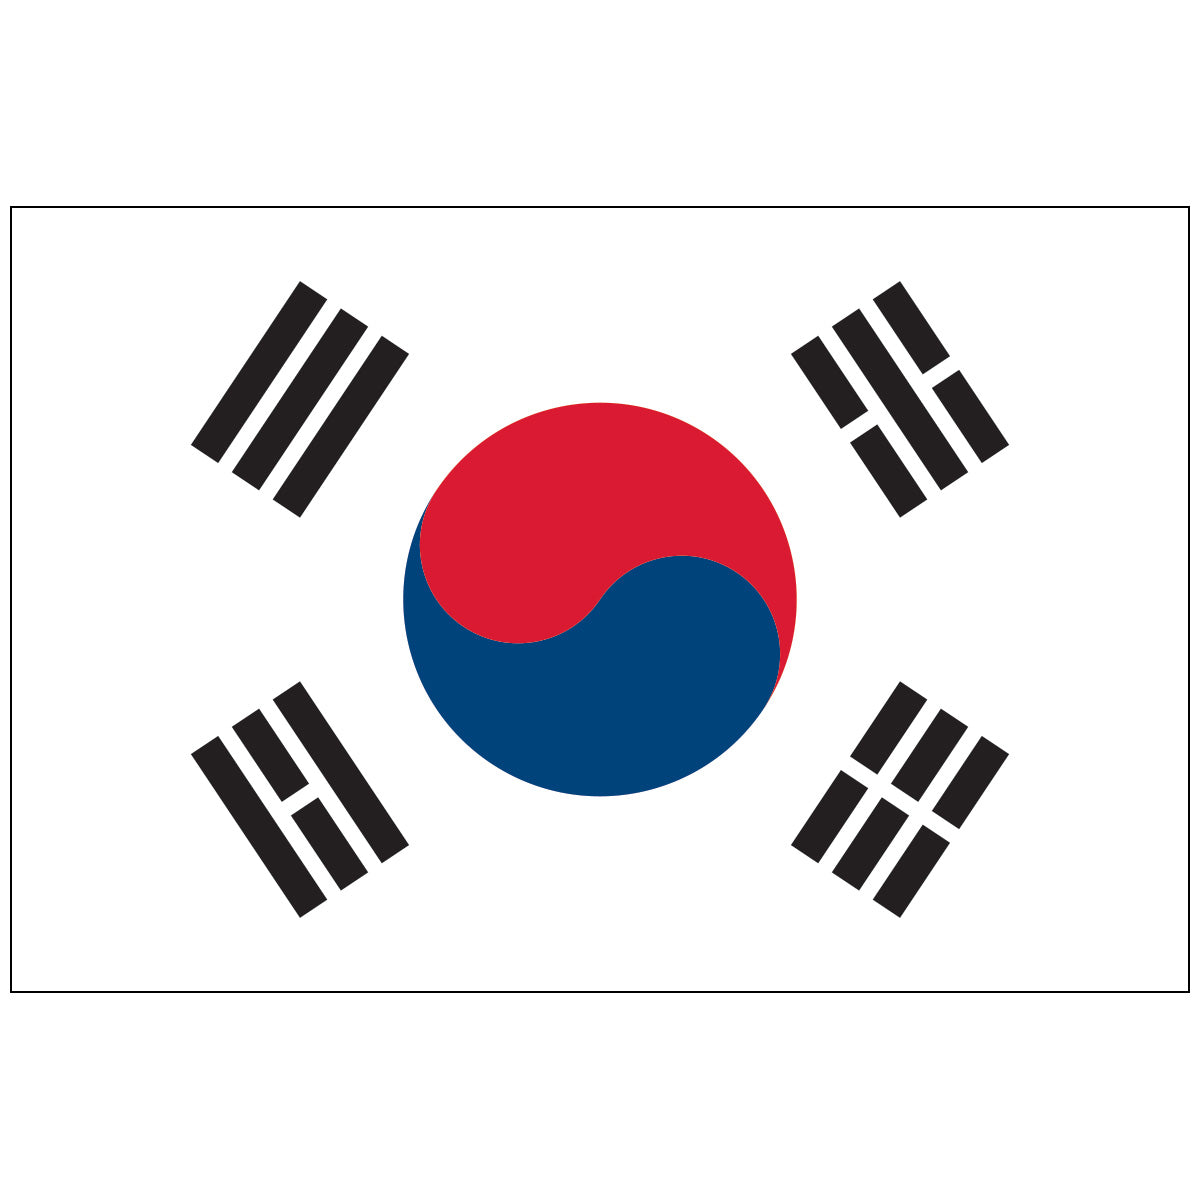 South Korea - World Flag